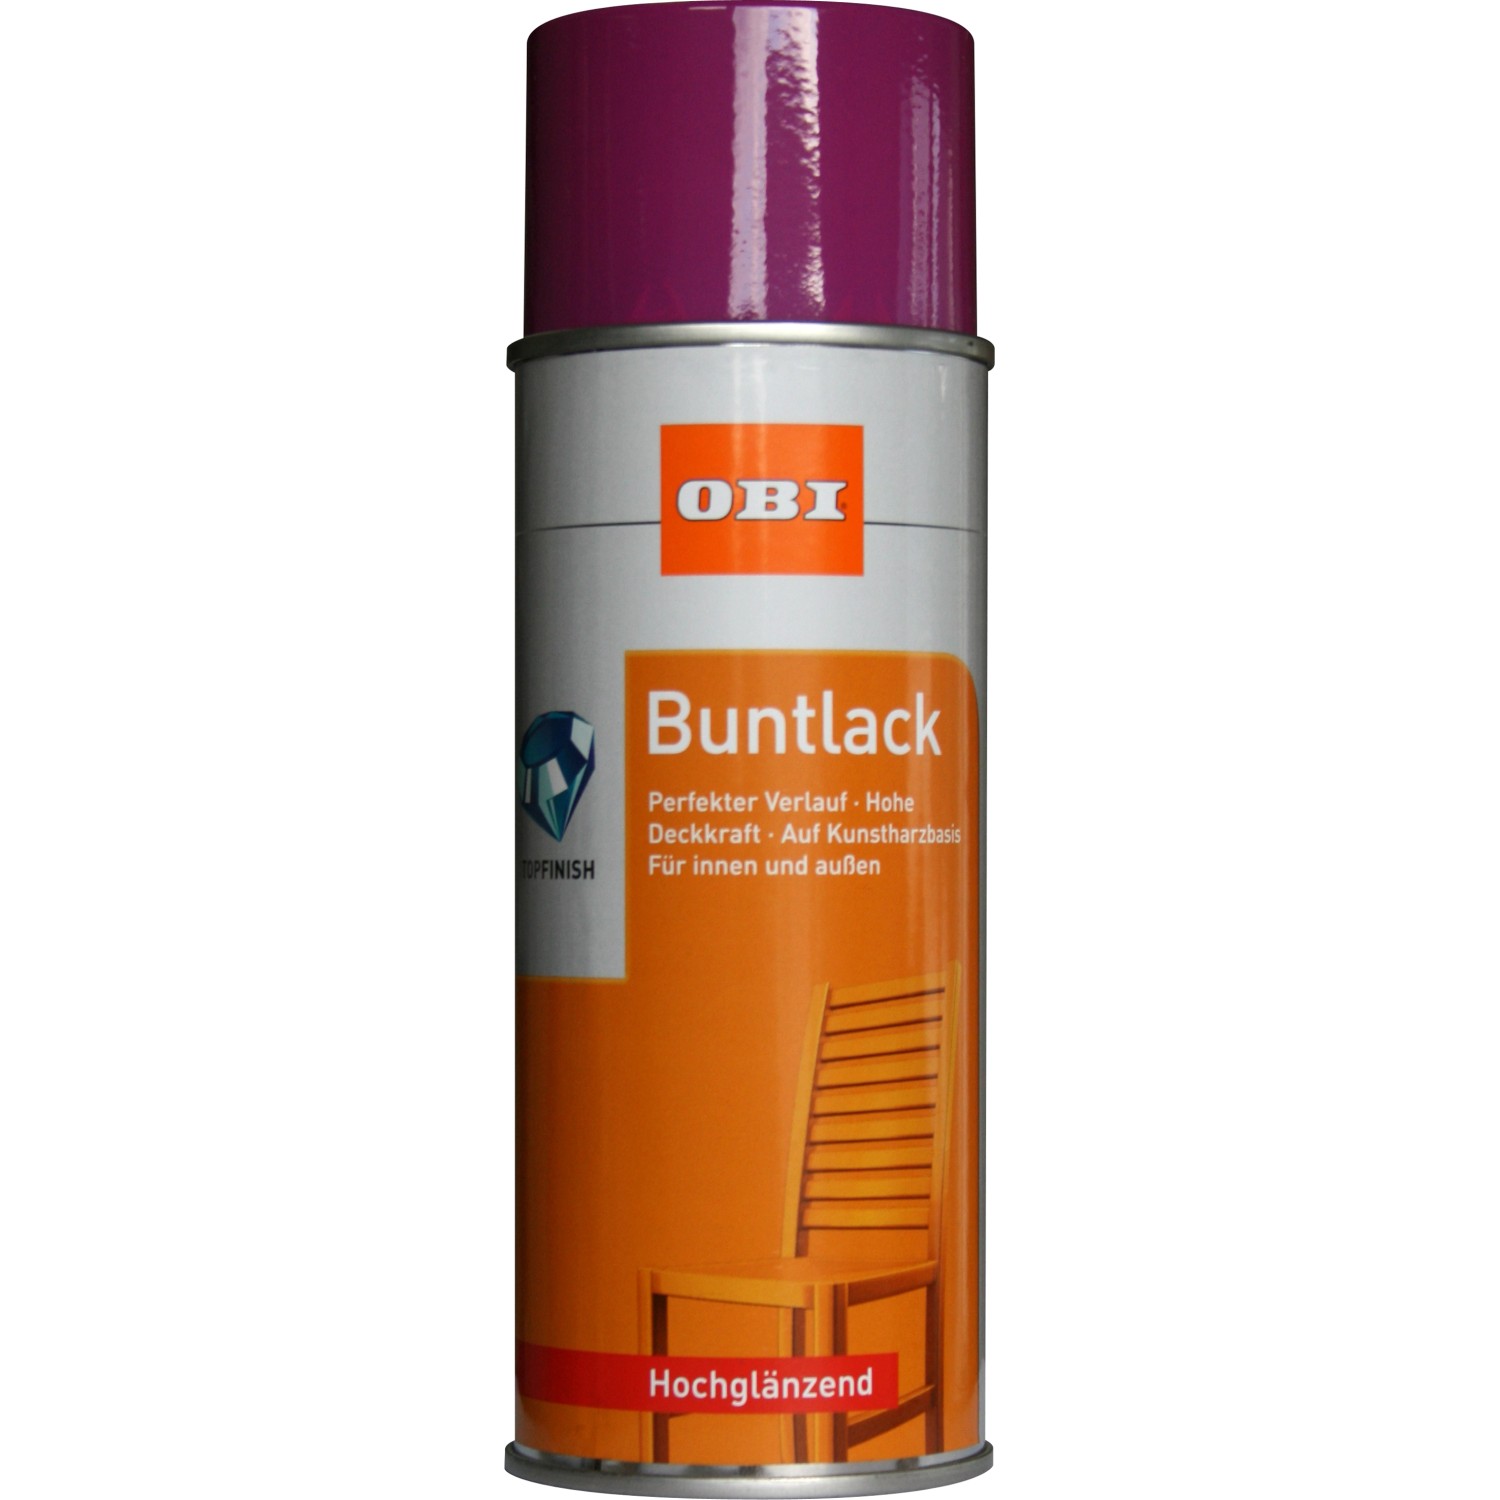 OBI Buntlack Spray RAL 4006 Purpur hochglänzend 400 ml von OBI